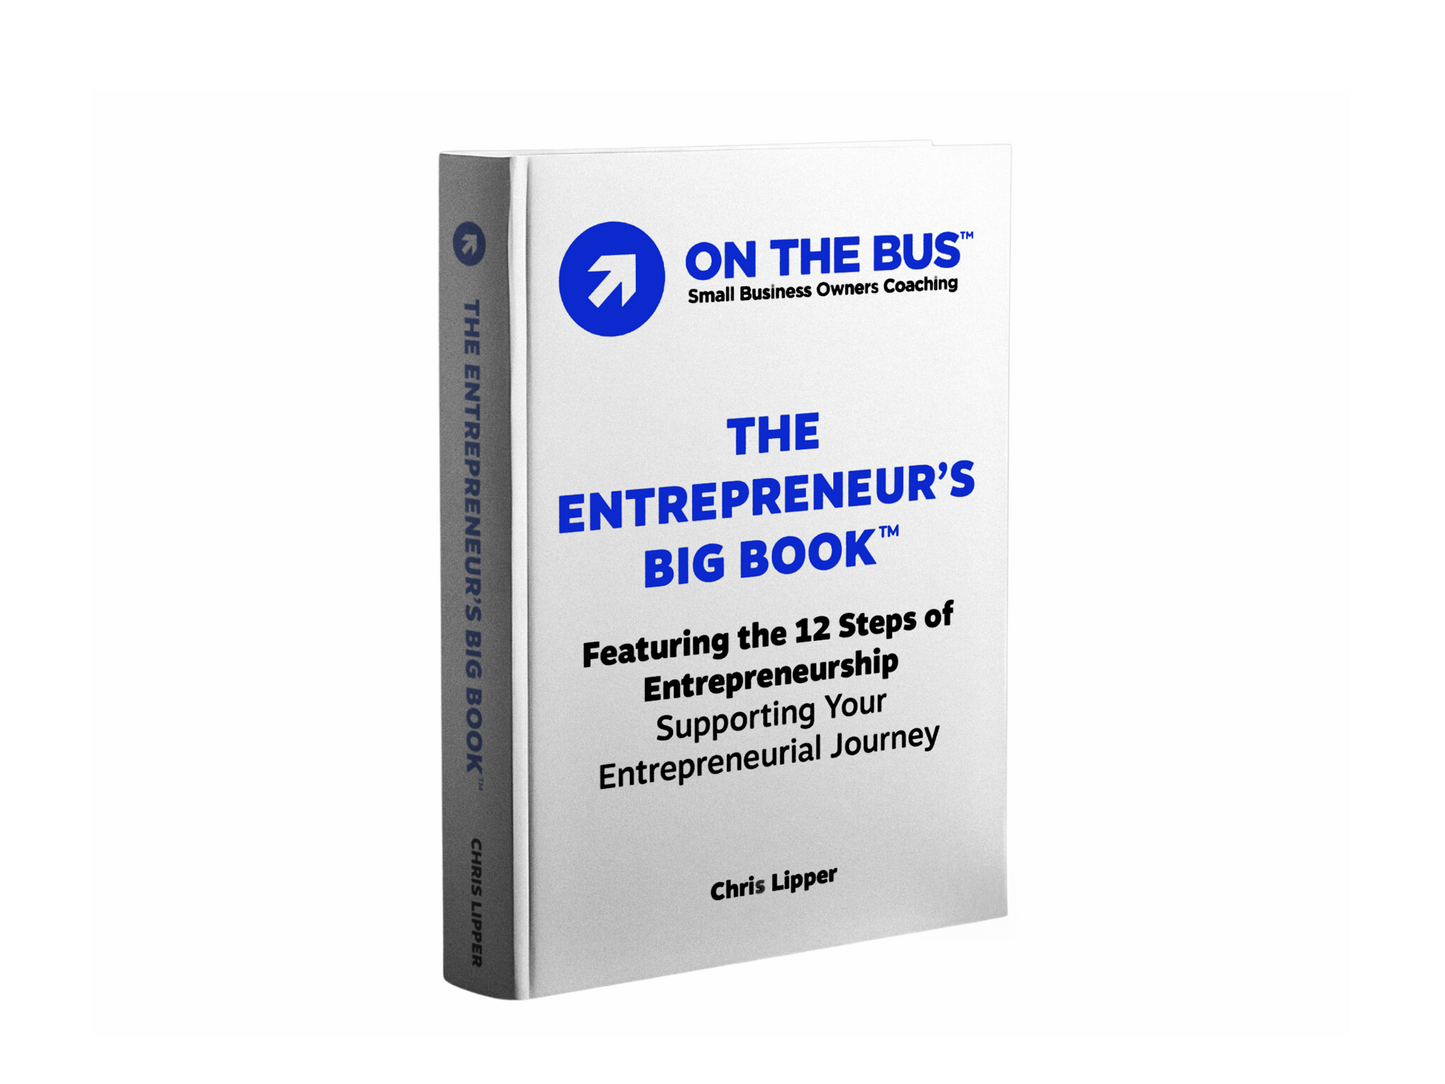 Entrepreneur's Big Book: Hardcover edition